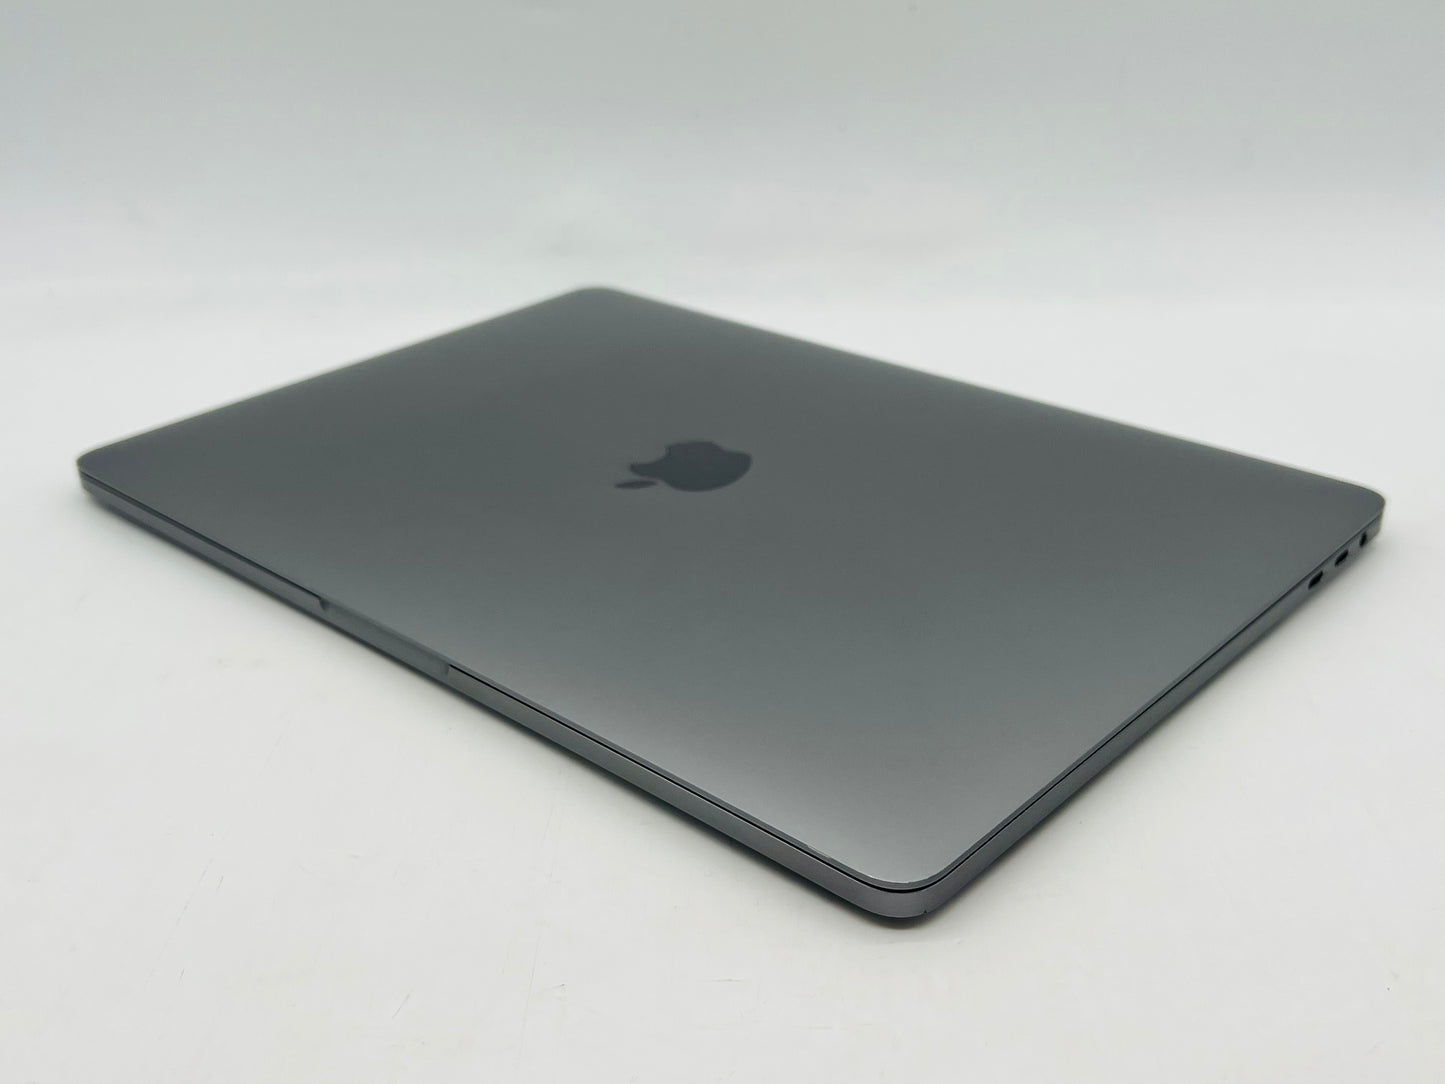 Apple 2019 MacBook Pro 13 in TB 2.4GHz i5 16GB RAM 256GB IIPG655 - Very Good